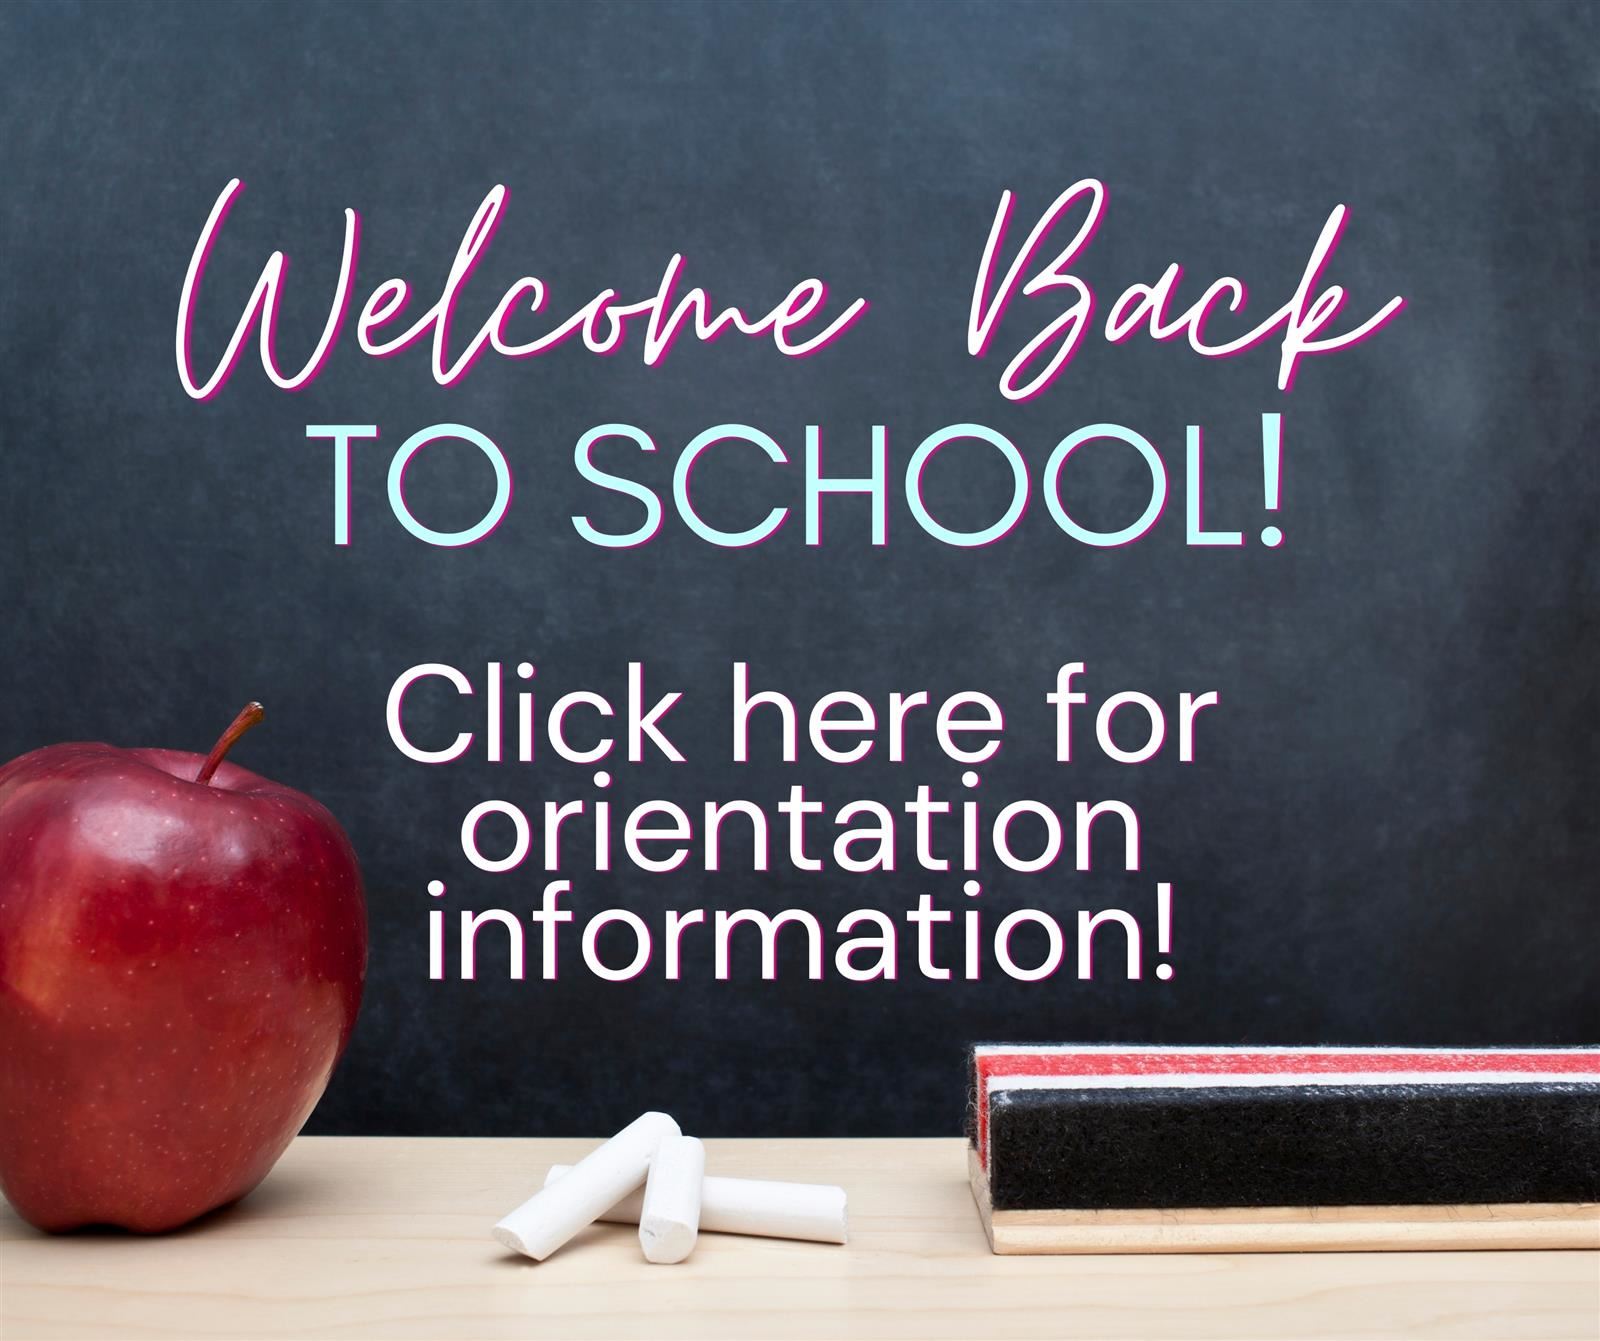  click for school orientation information